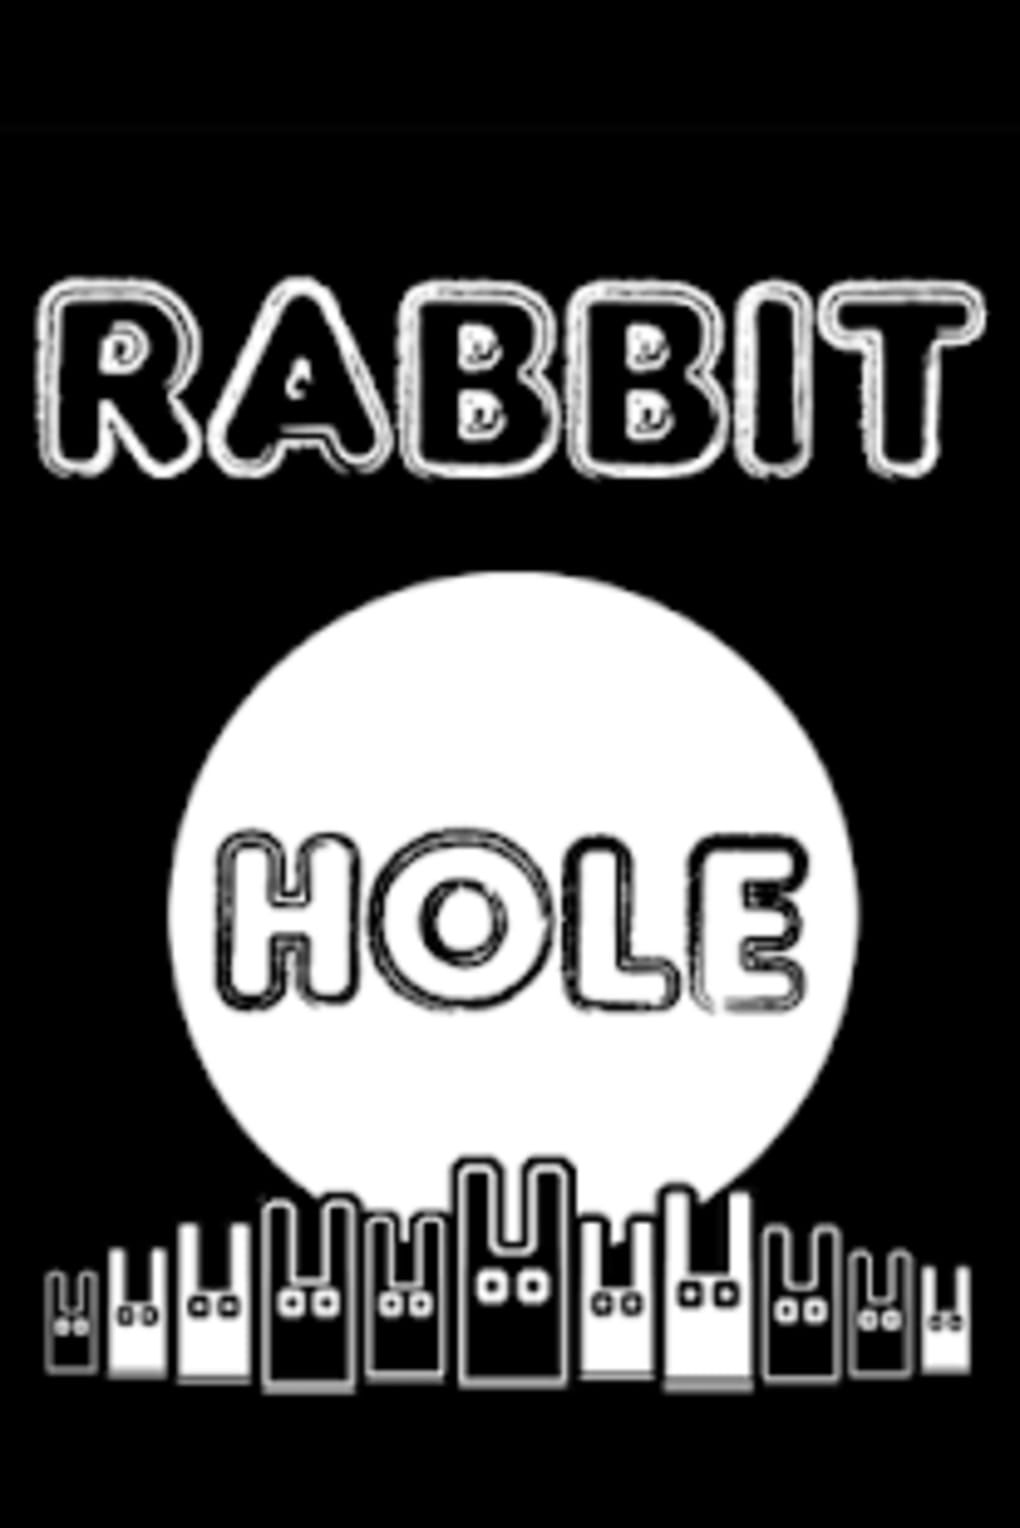 Rabbit hole download. Rabbit hole игра. Rabbit hole скрины песня. Rabbit hole песня. Rabbit hole deco 27.